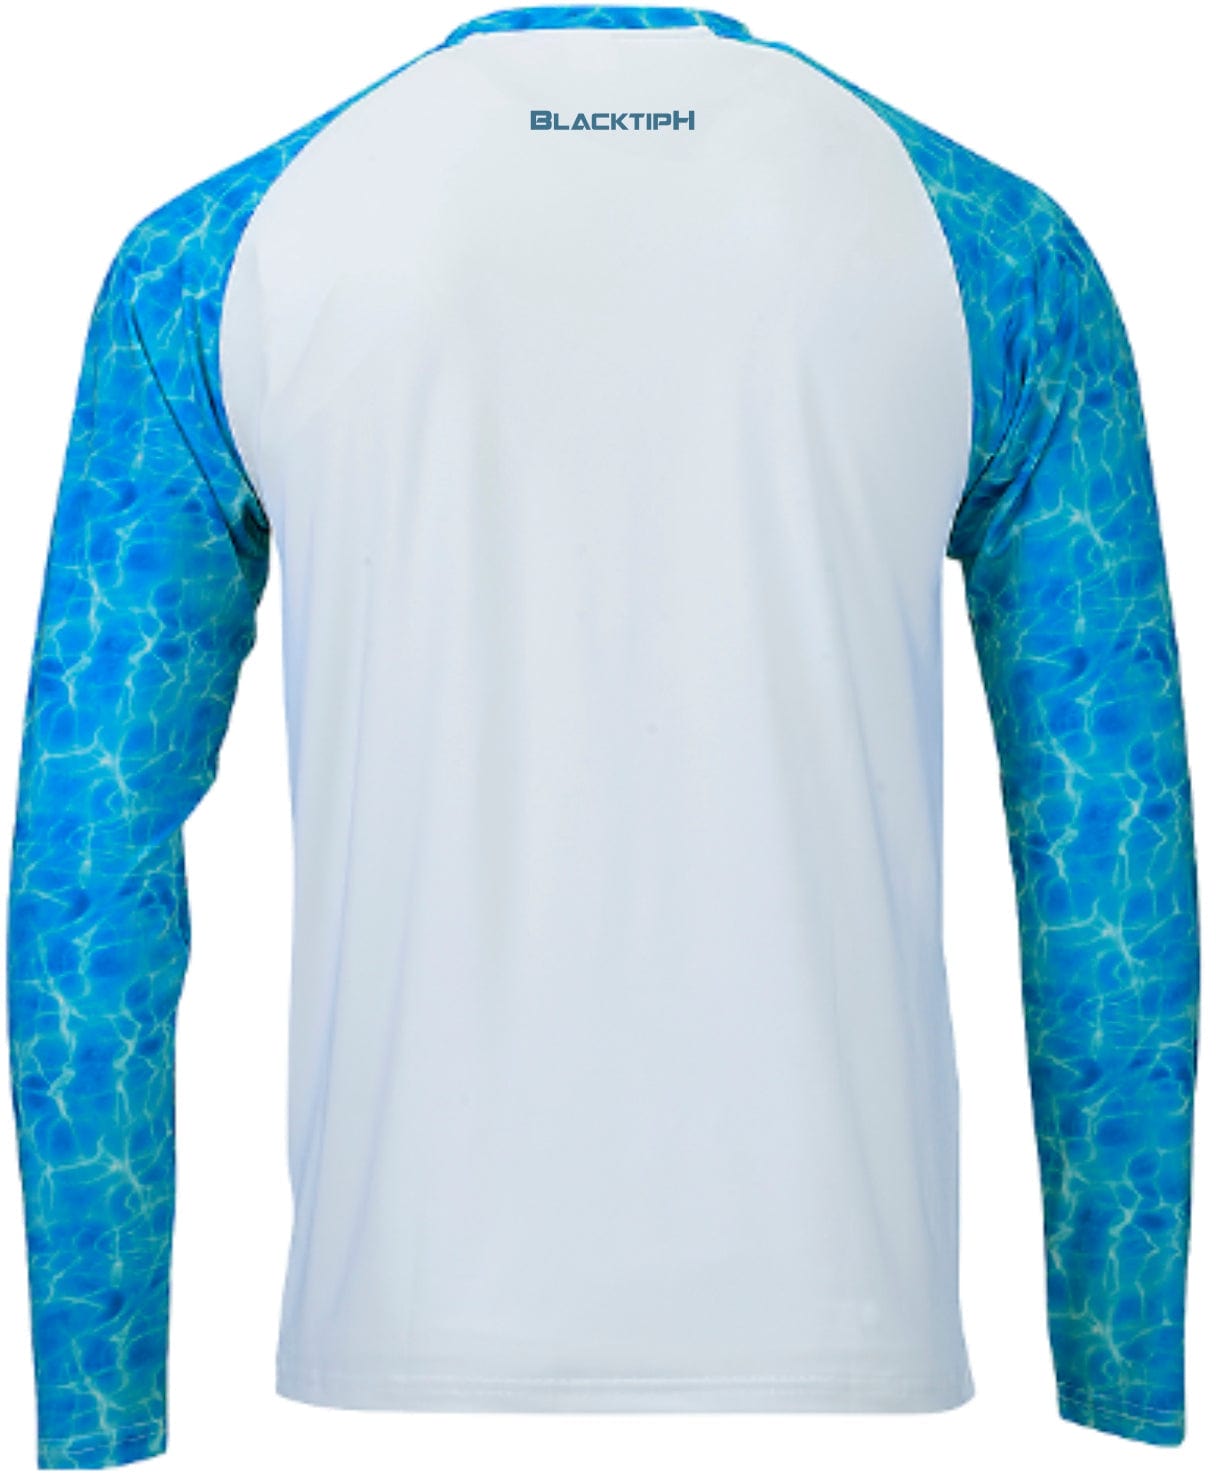 BlacktipH Interlock Performance Shirt Shoreline Blue Sleeves | Size Large